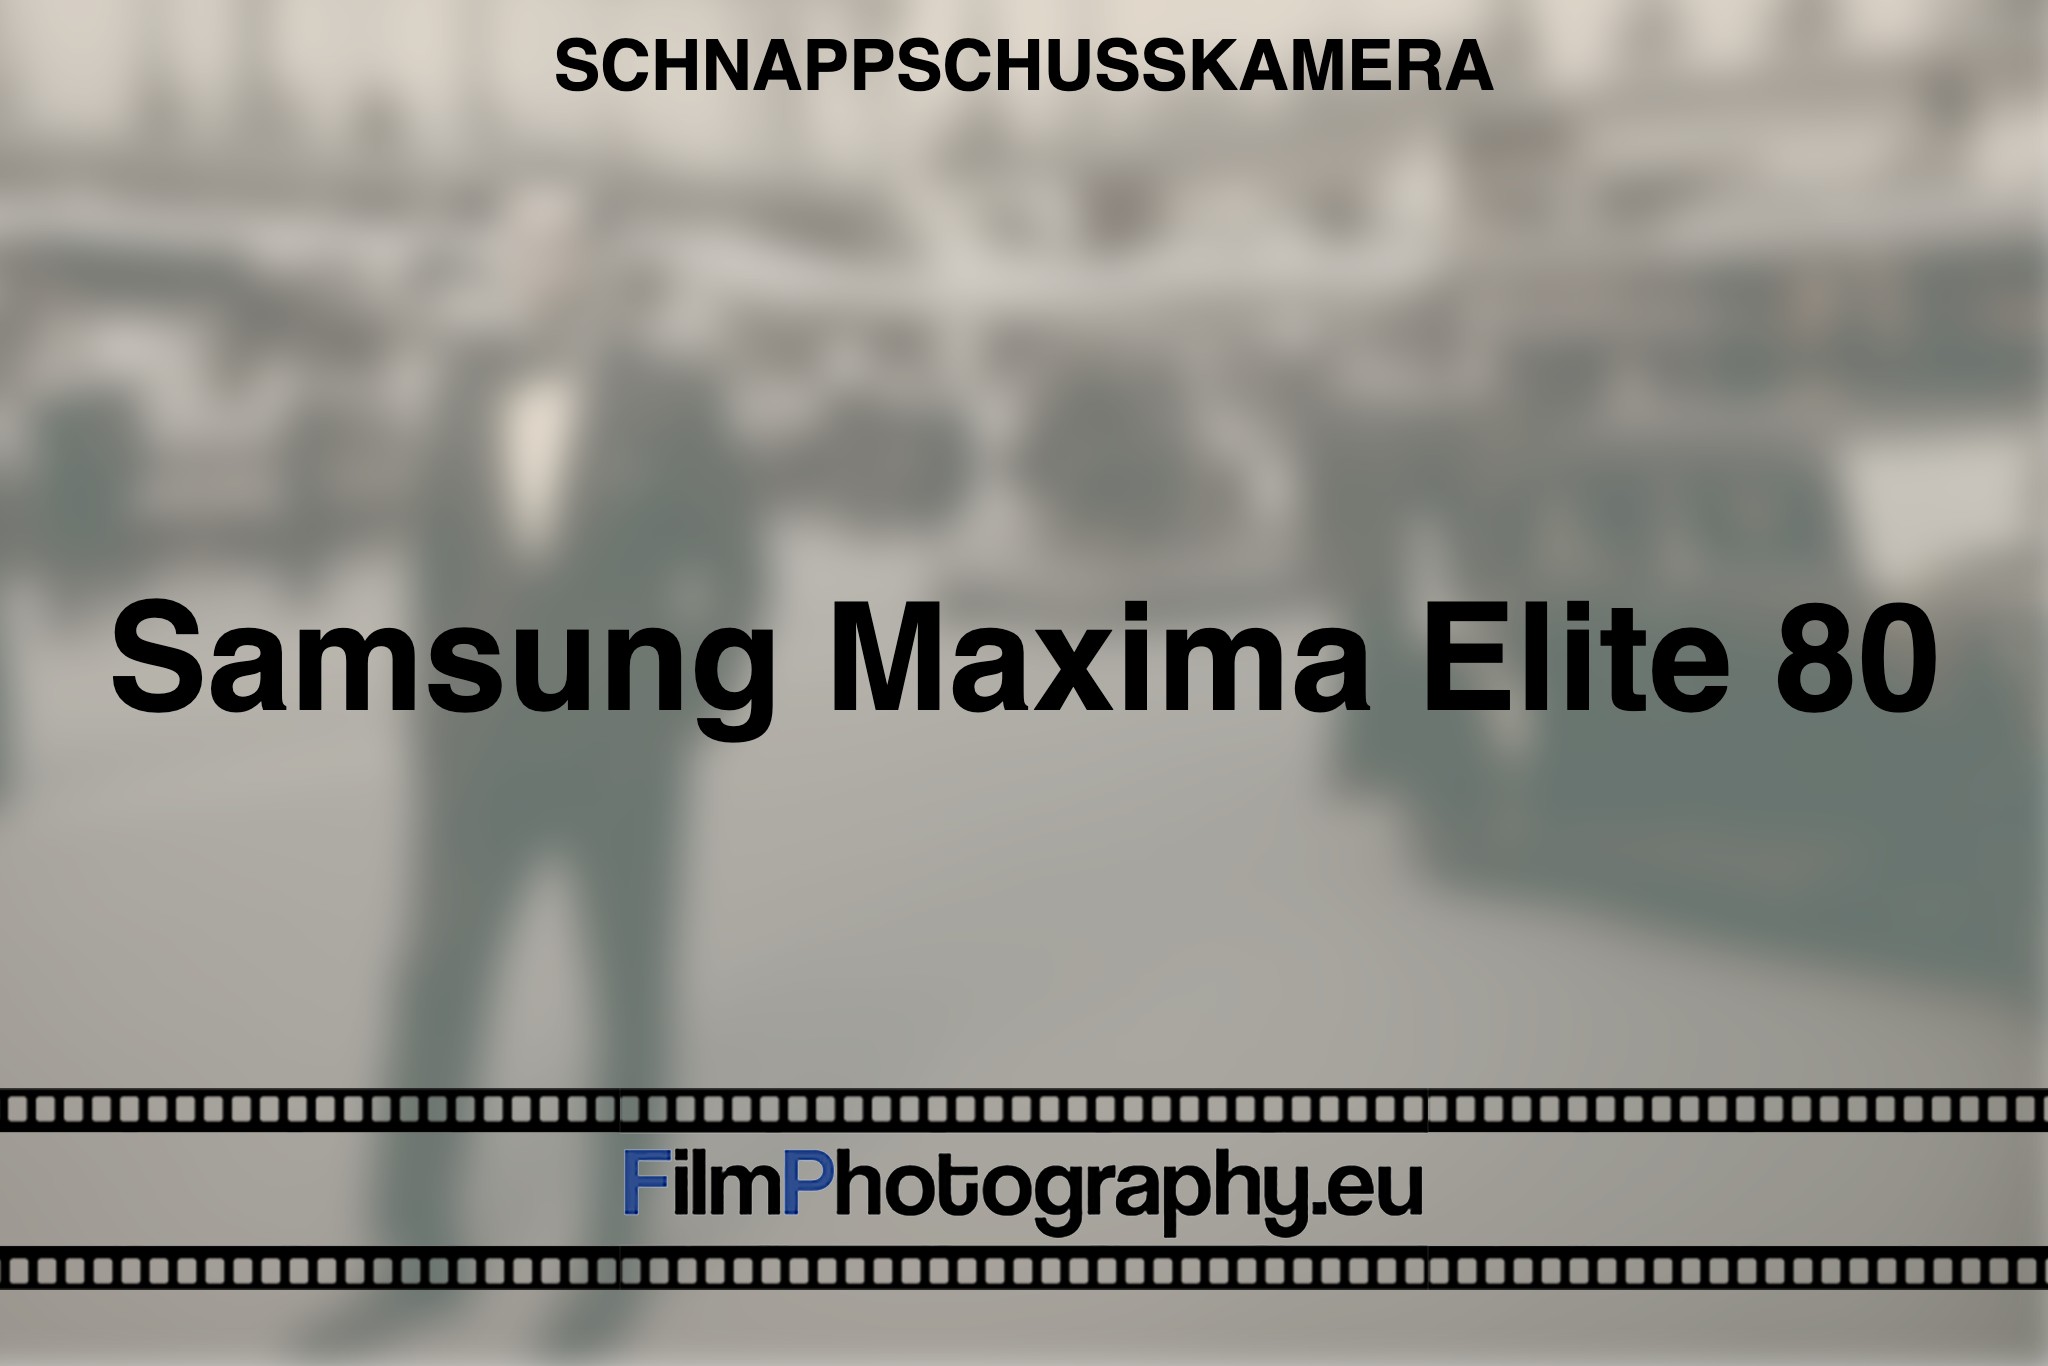 samsung-maxima-elite-80-schnappschusskamera-bnv